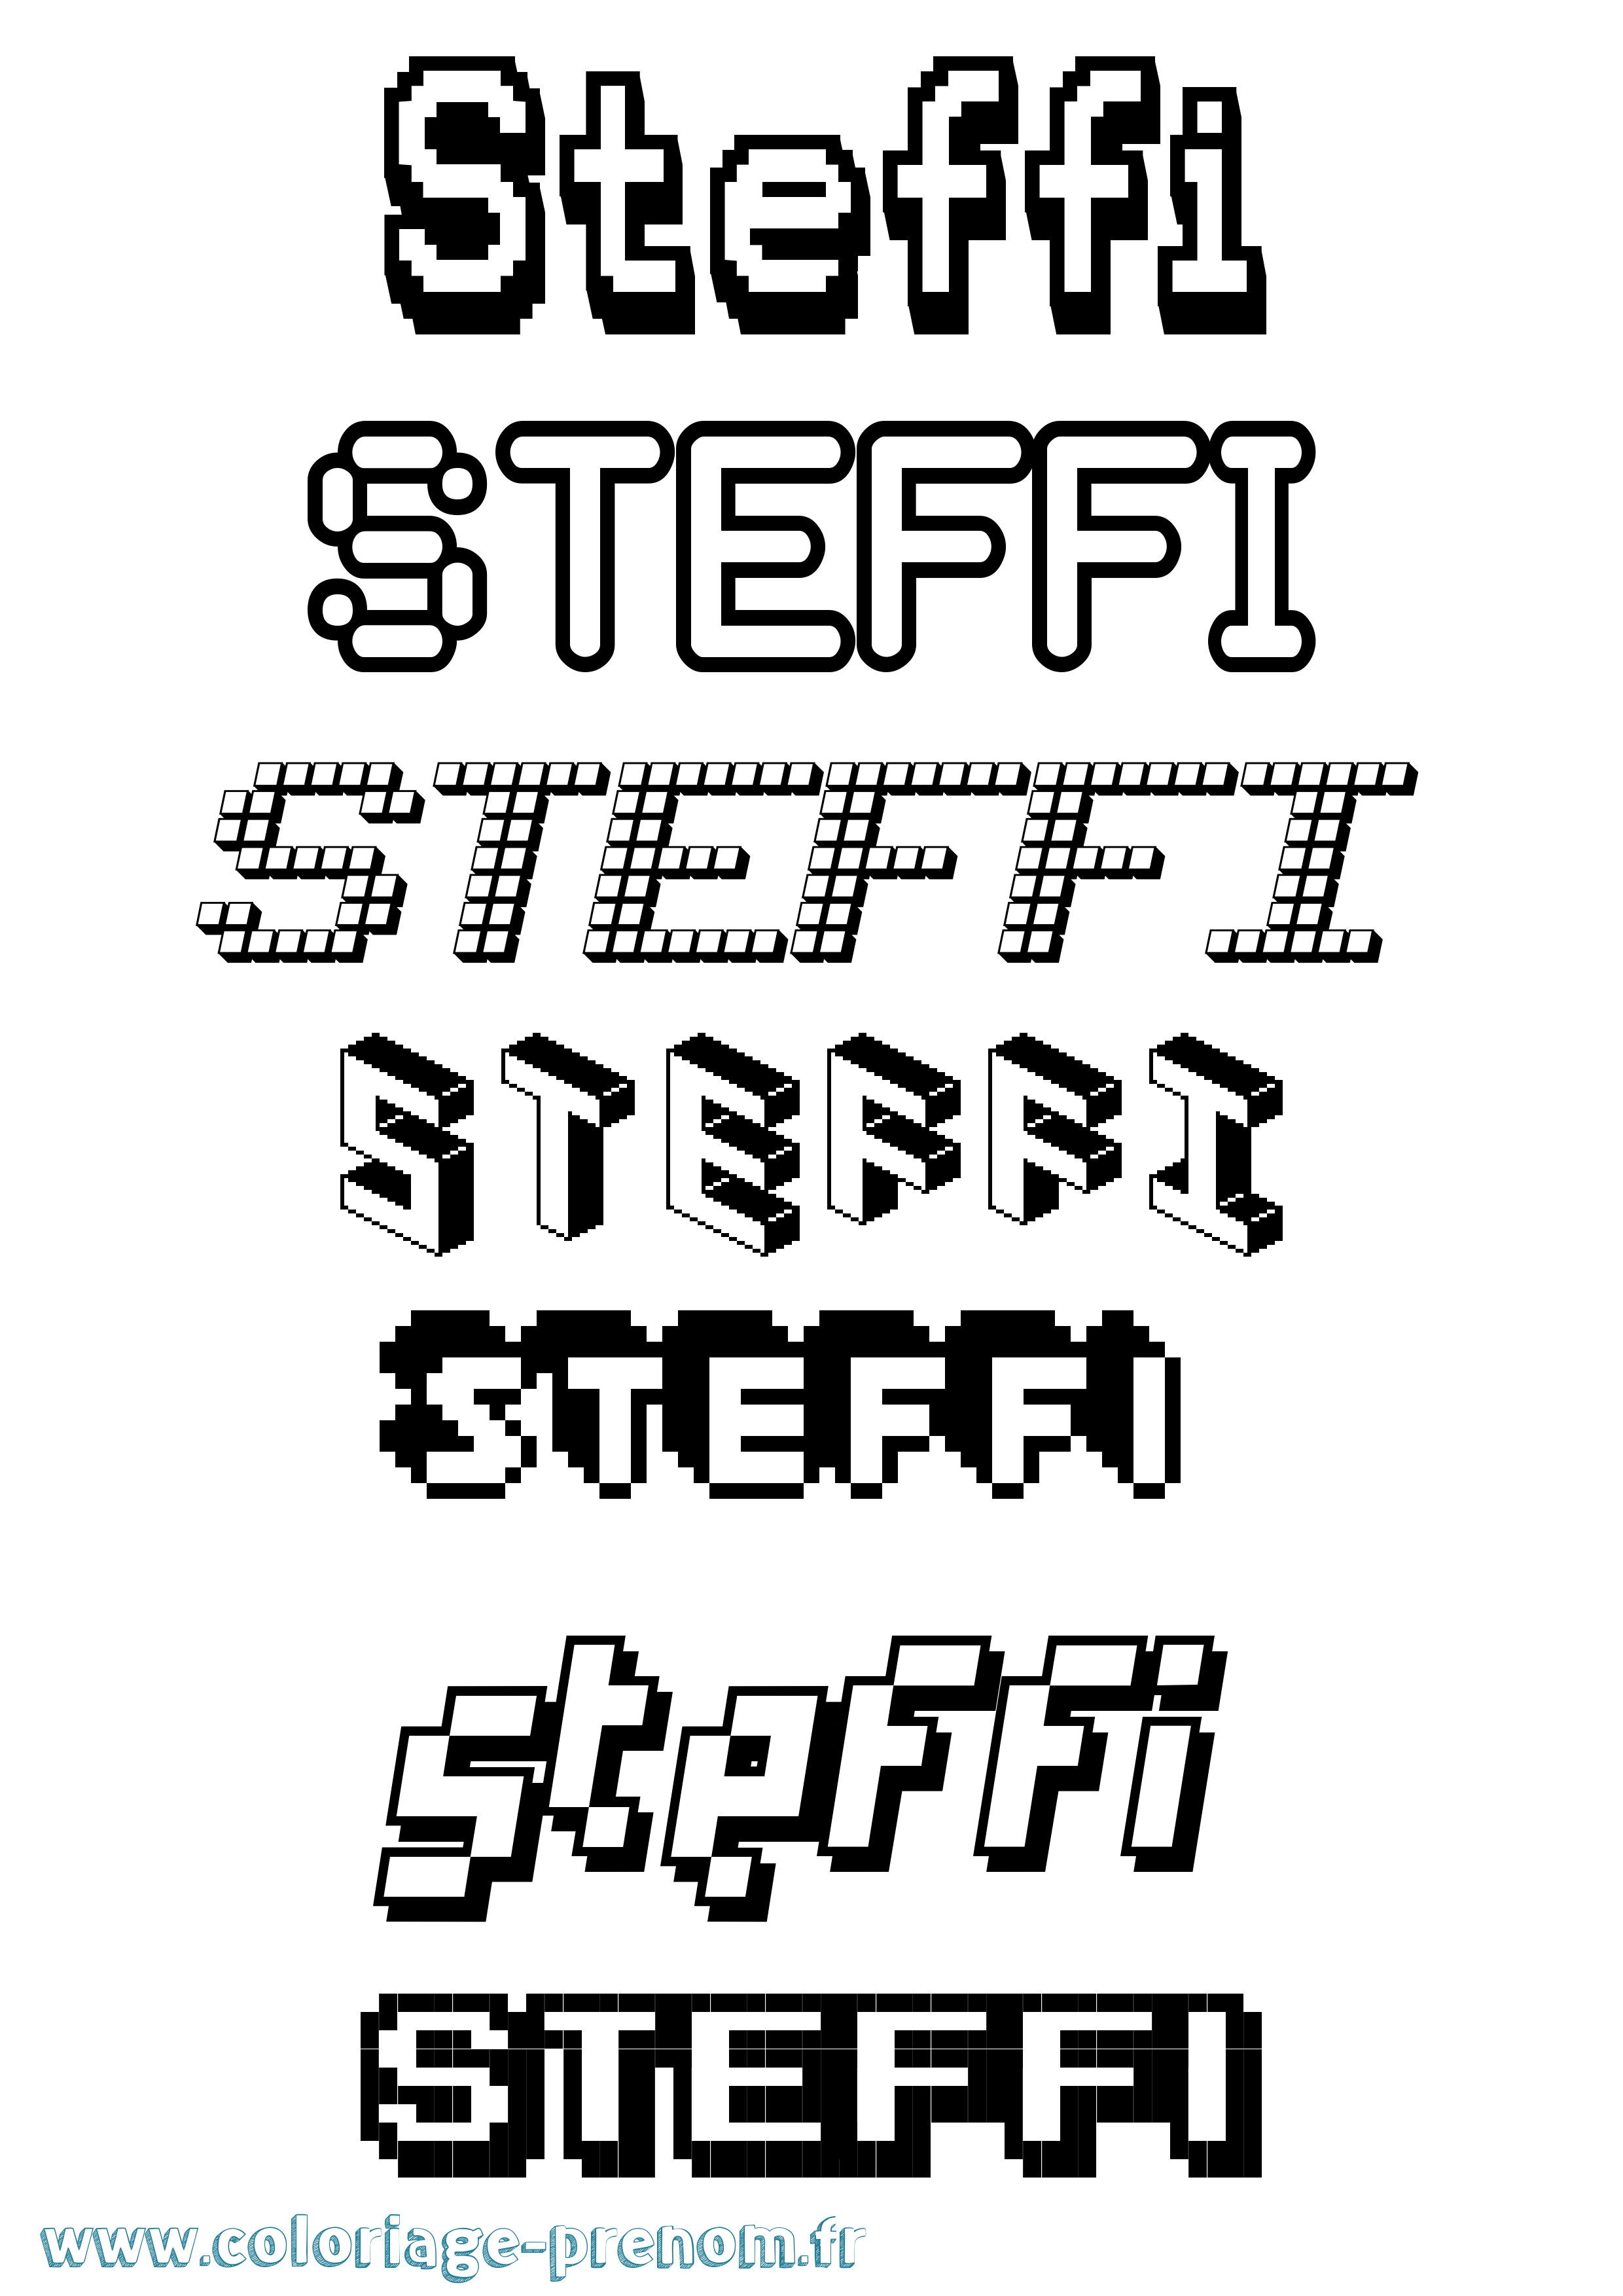 Coloriage prénom Steffi Pixel